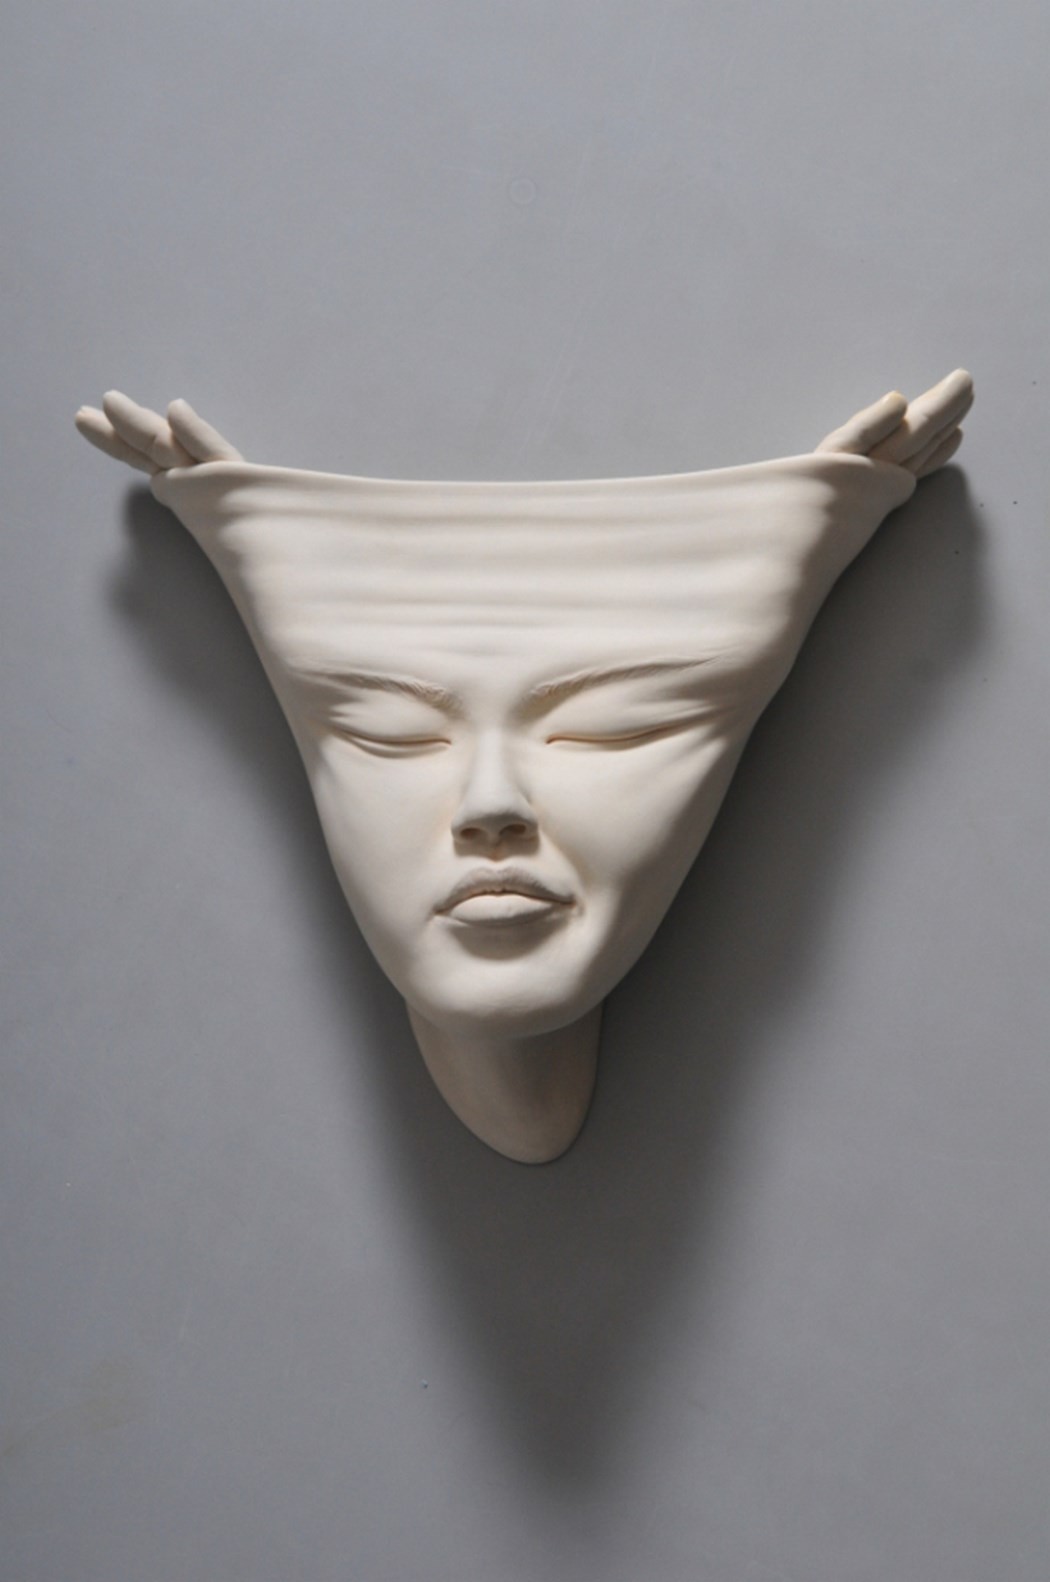 ceramic sculpture byjohnson tsang